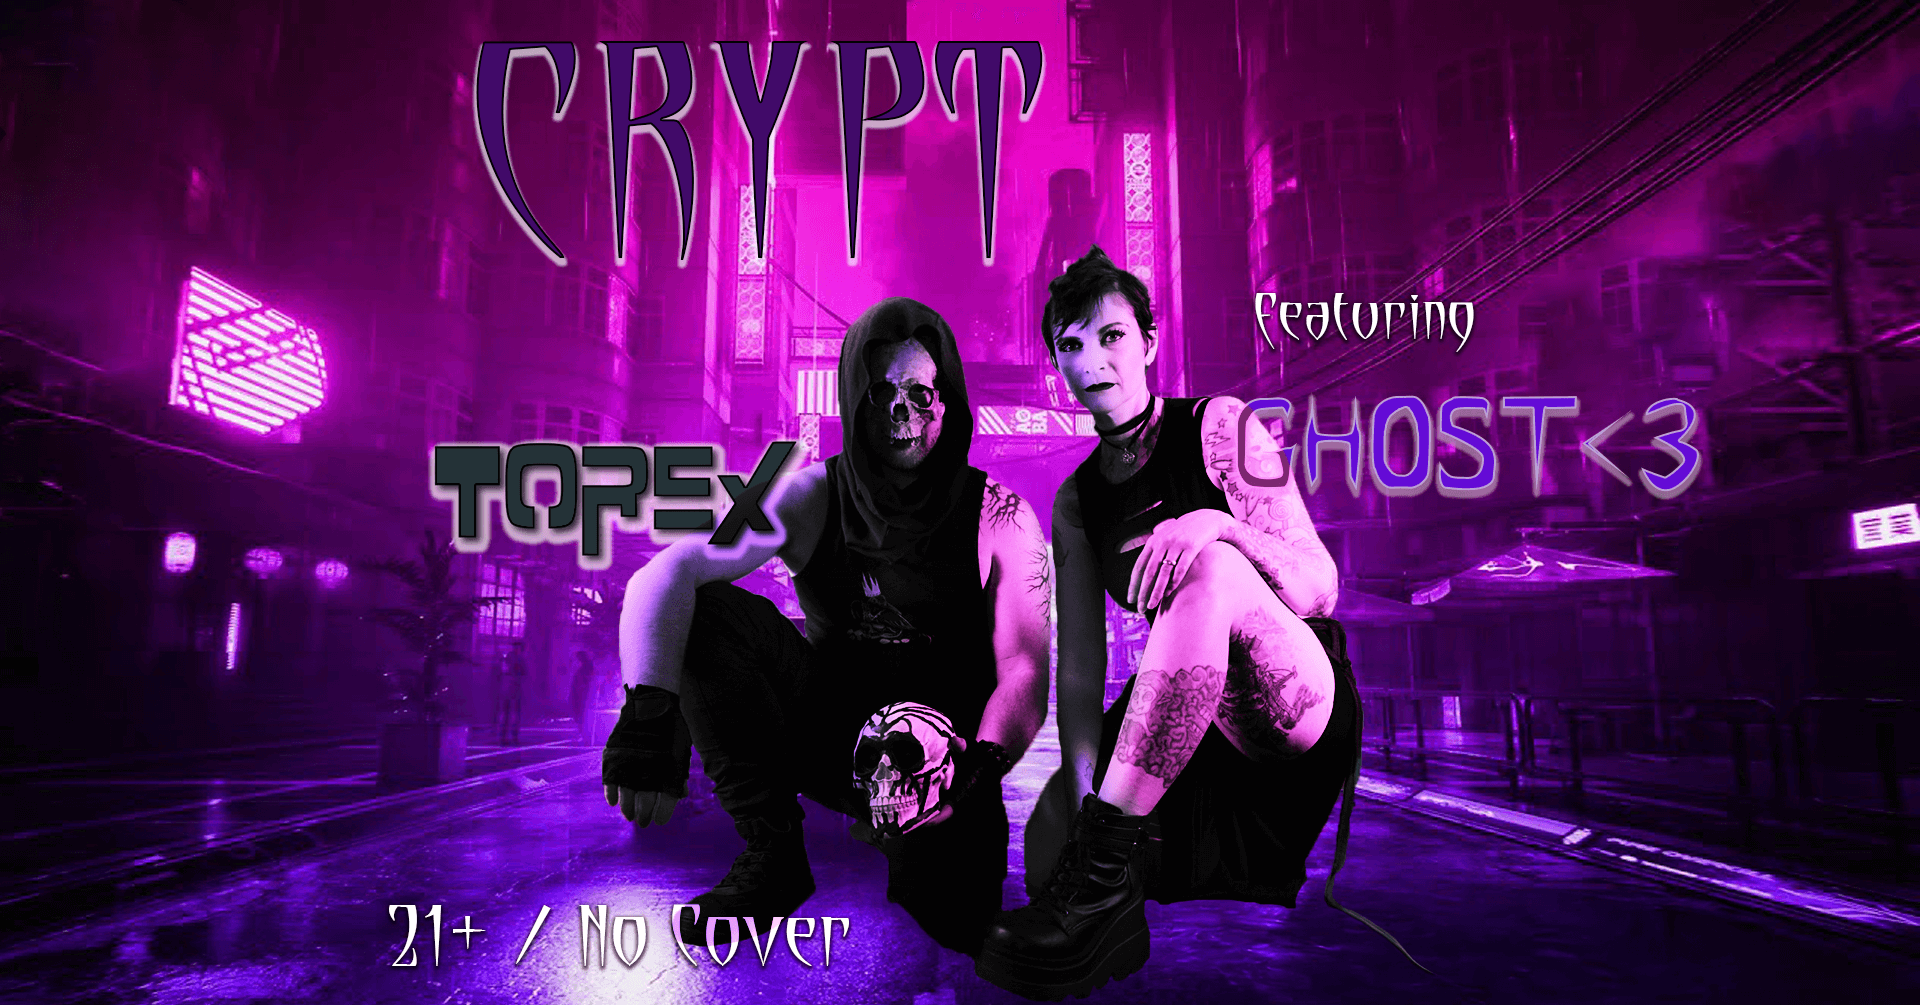 Crypt DJ performance poster